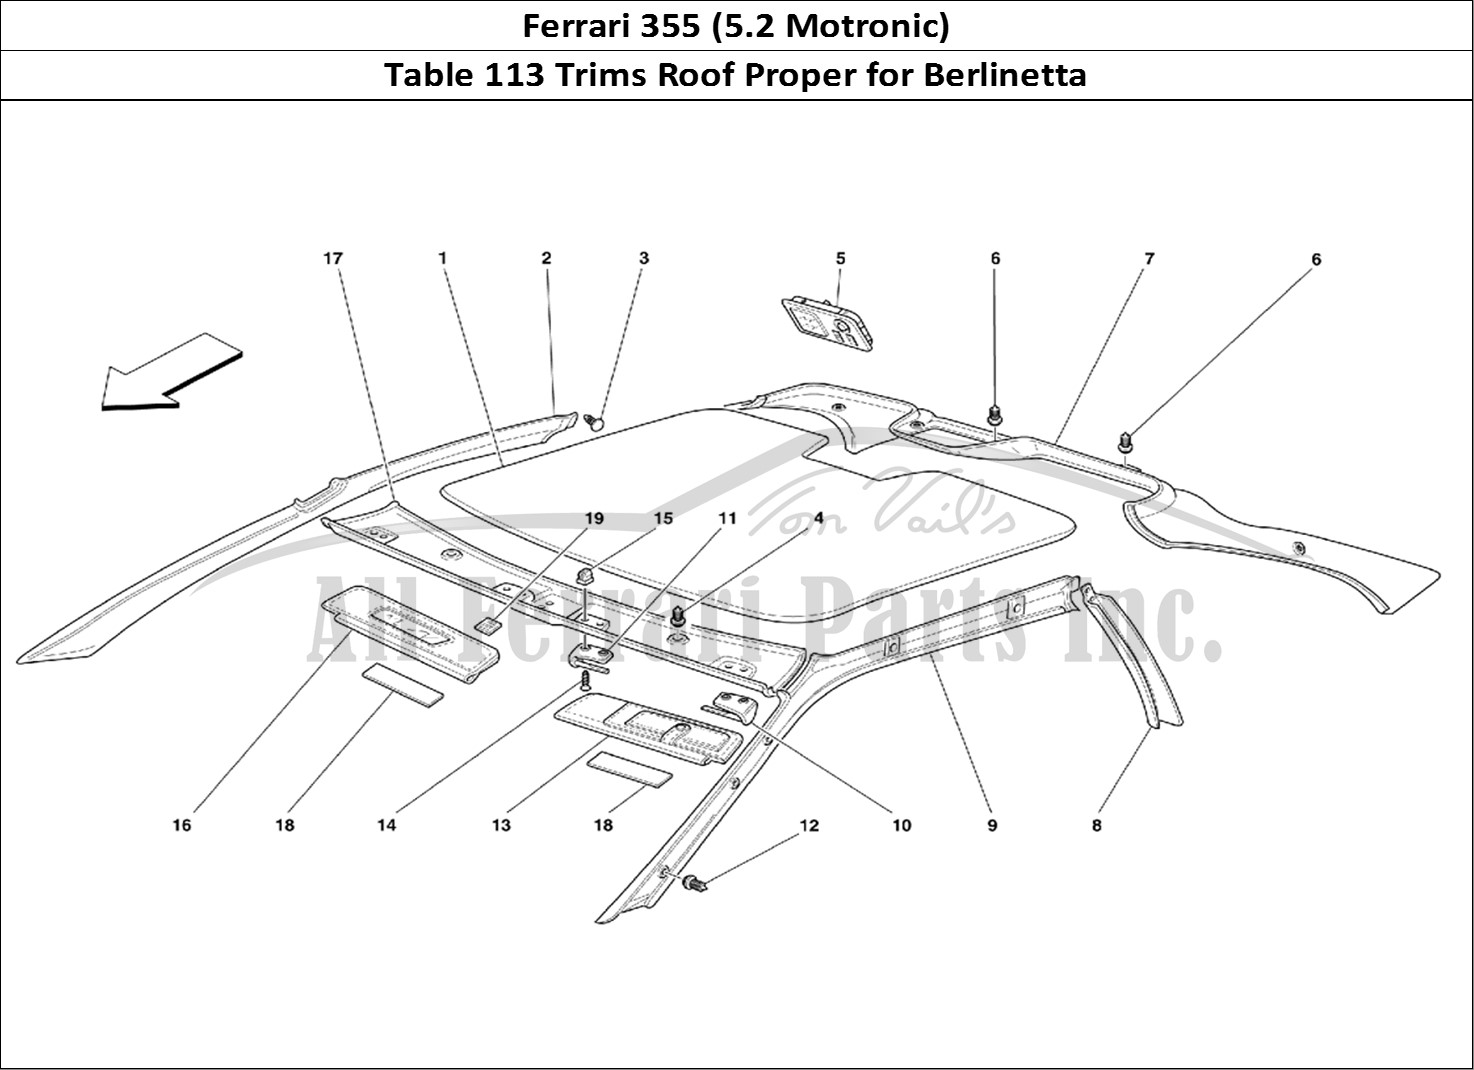 Ferrari Parts Ferrari 355 (5.2 Motronic) Page 113 Roof Trims -Valid for Ber